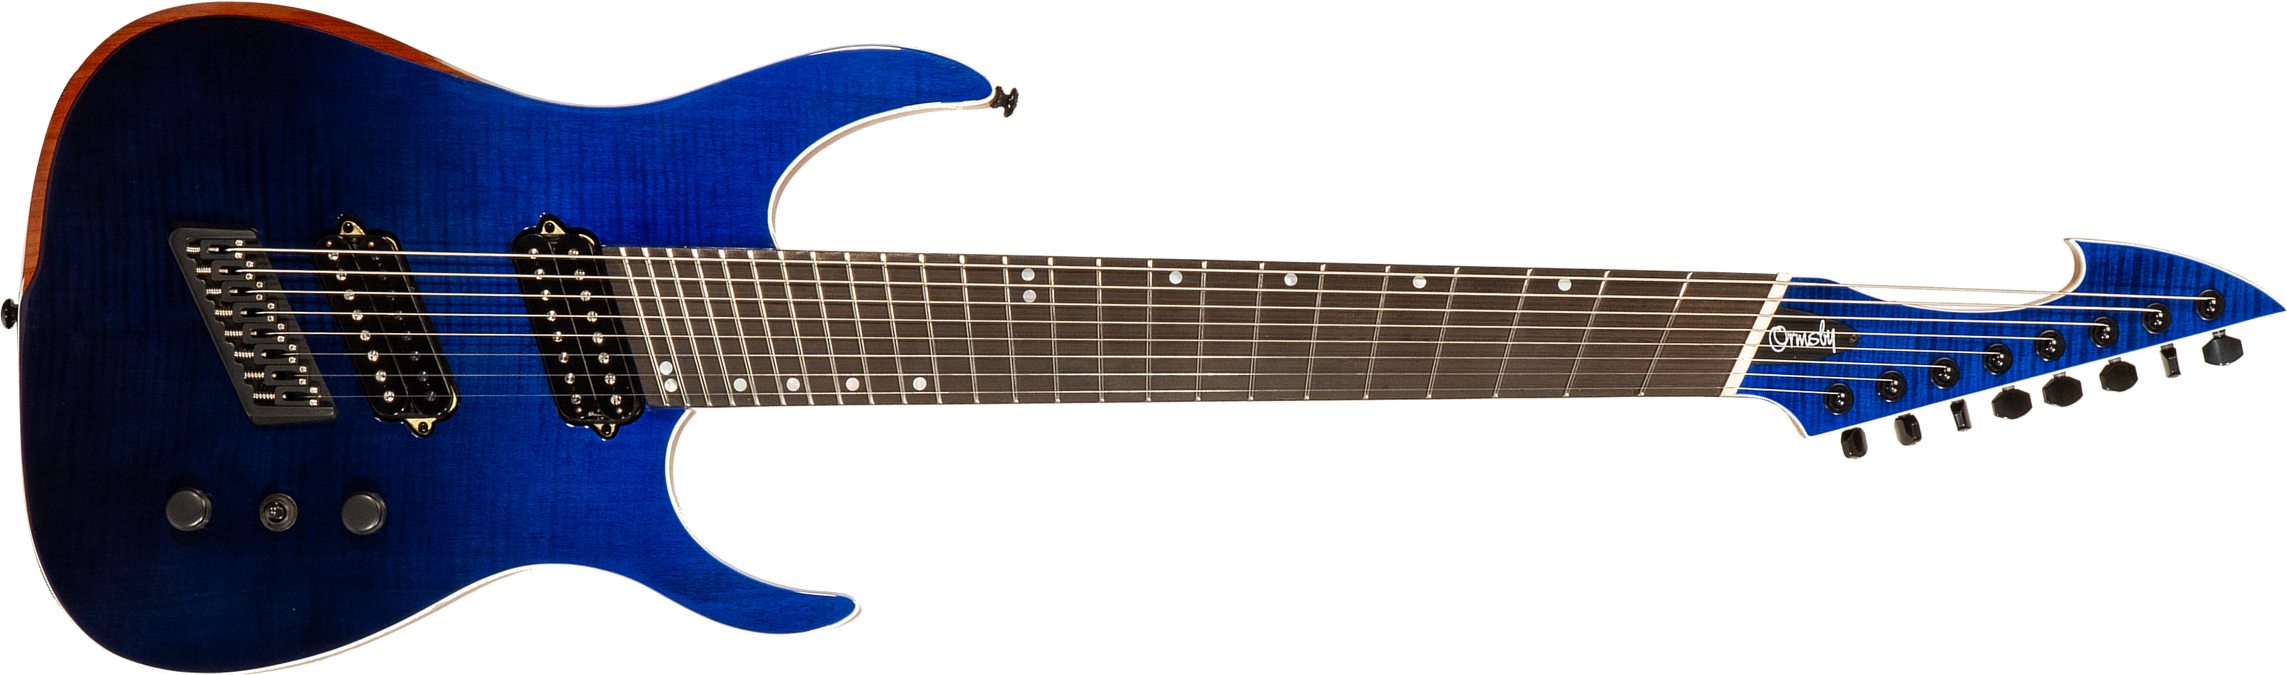 Ormsby Hype Gtr 8 Ltd Run 16 8c Multiscale 2h Ht Eb #gtr07665 - Sky Fall - Guitarra electrica de 8 y 9 cuerdas - Main picture